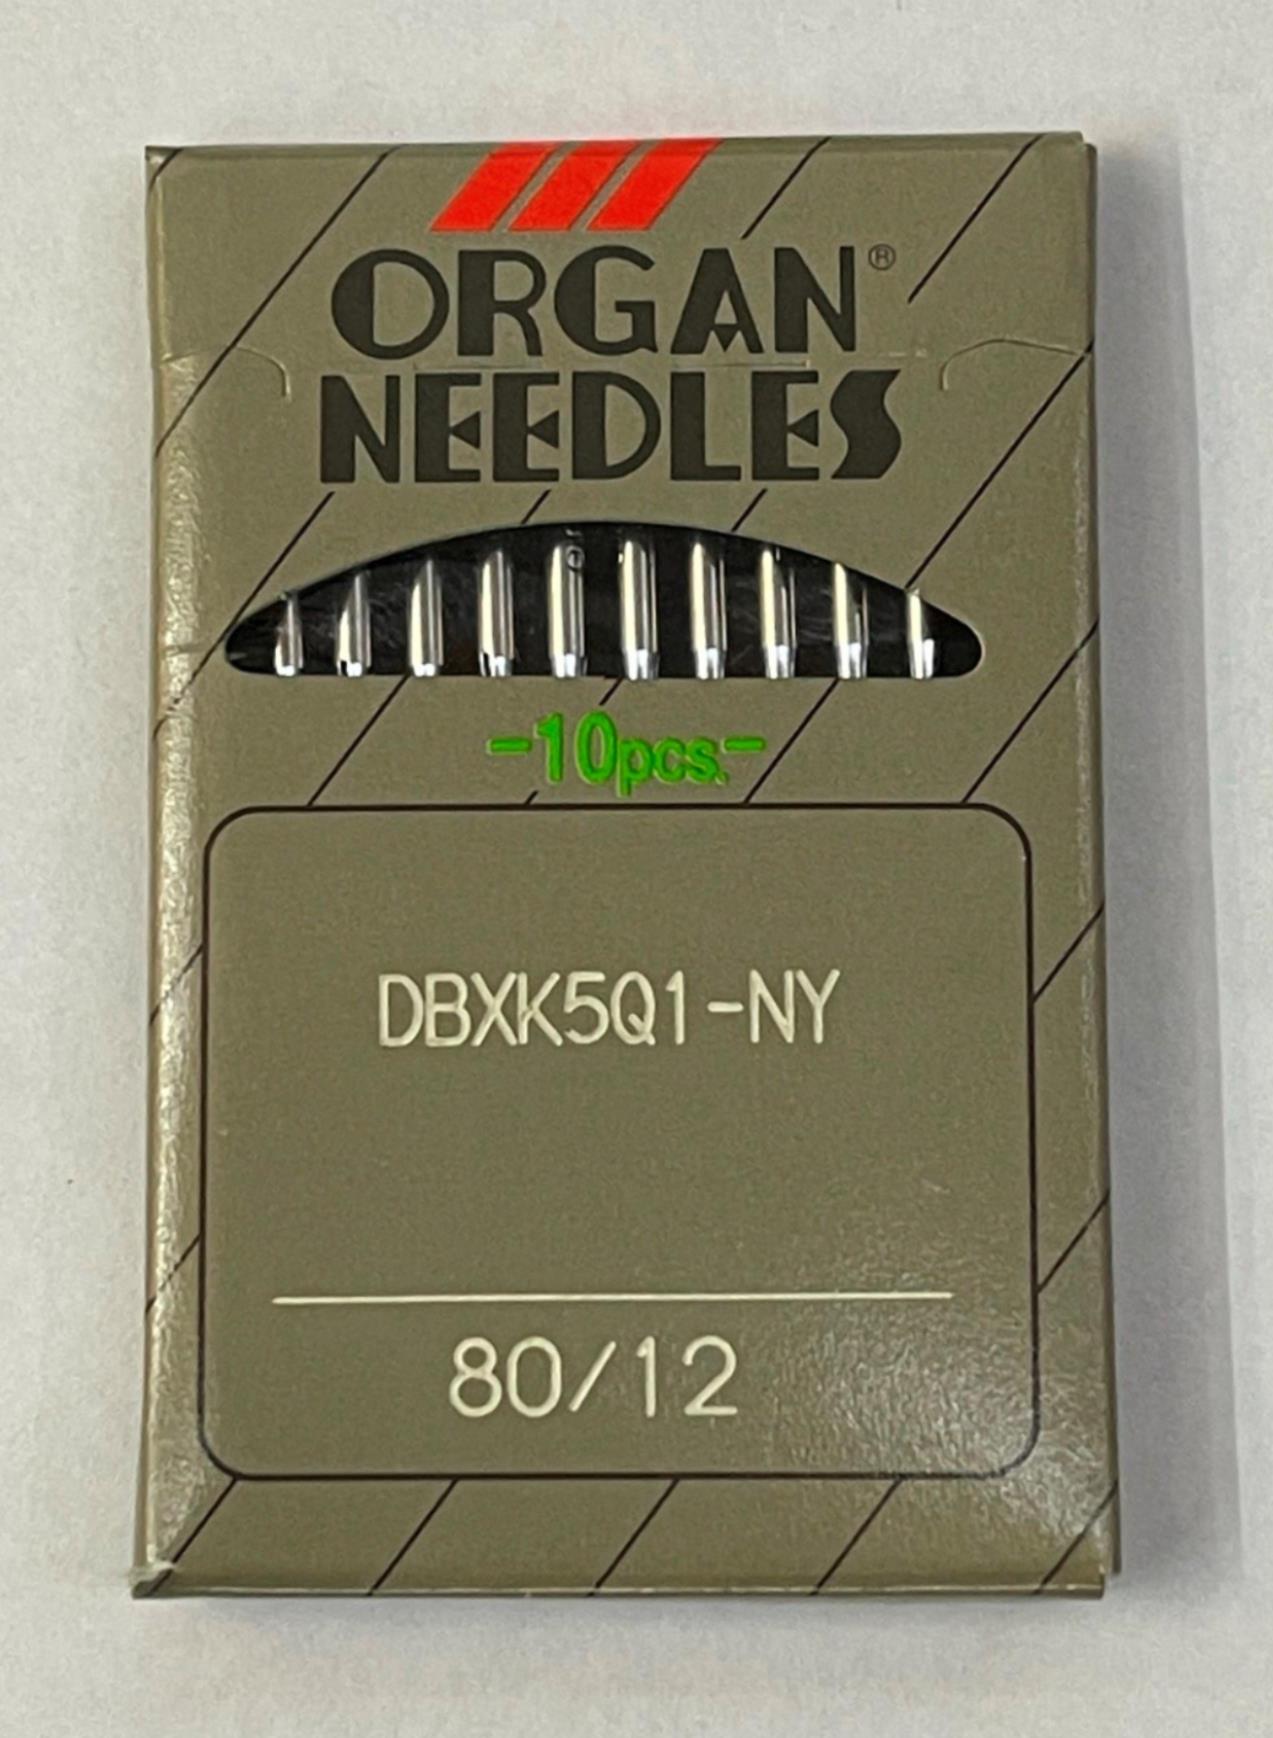 Organ DBxK5Q1-NY Needles